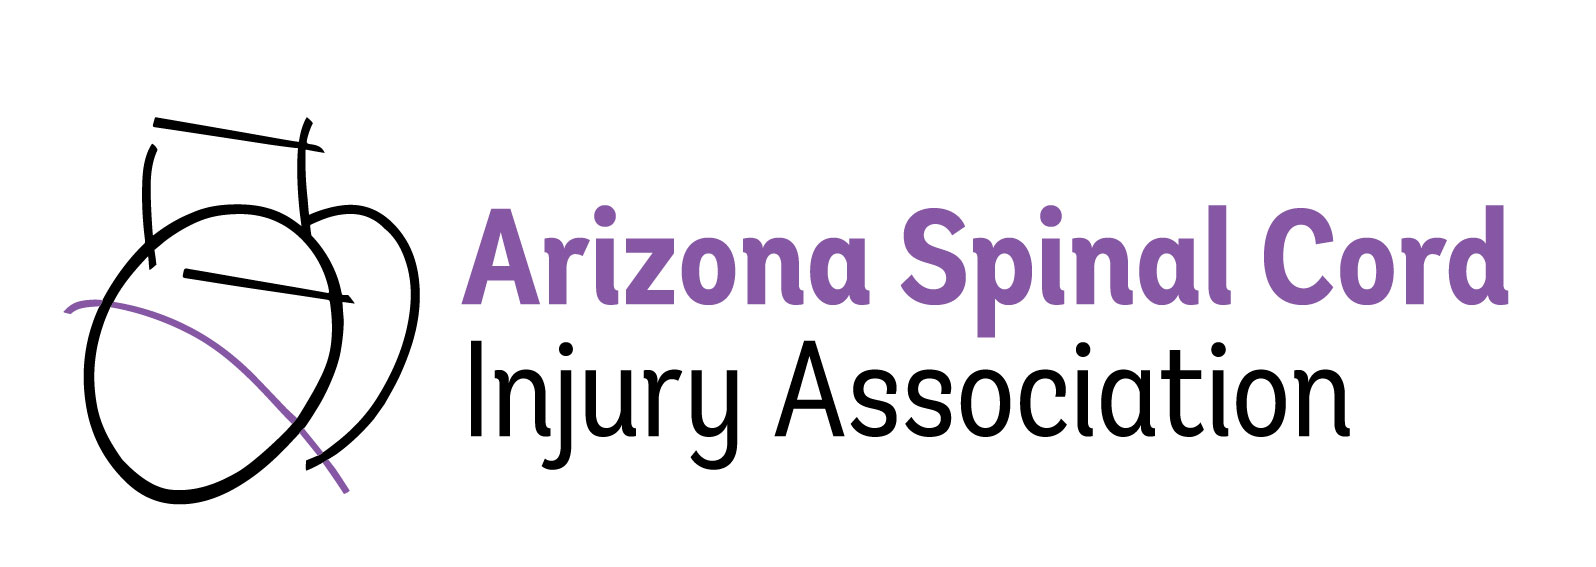 Arizona Spinal Cord Injury Association logo